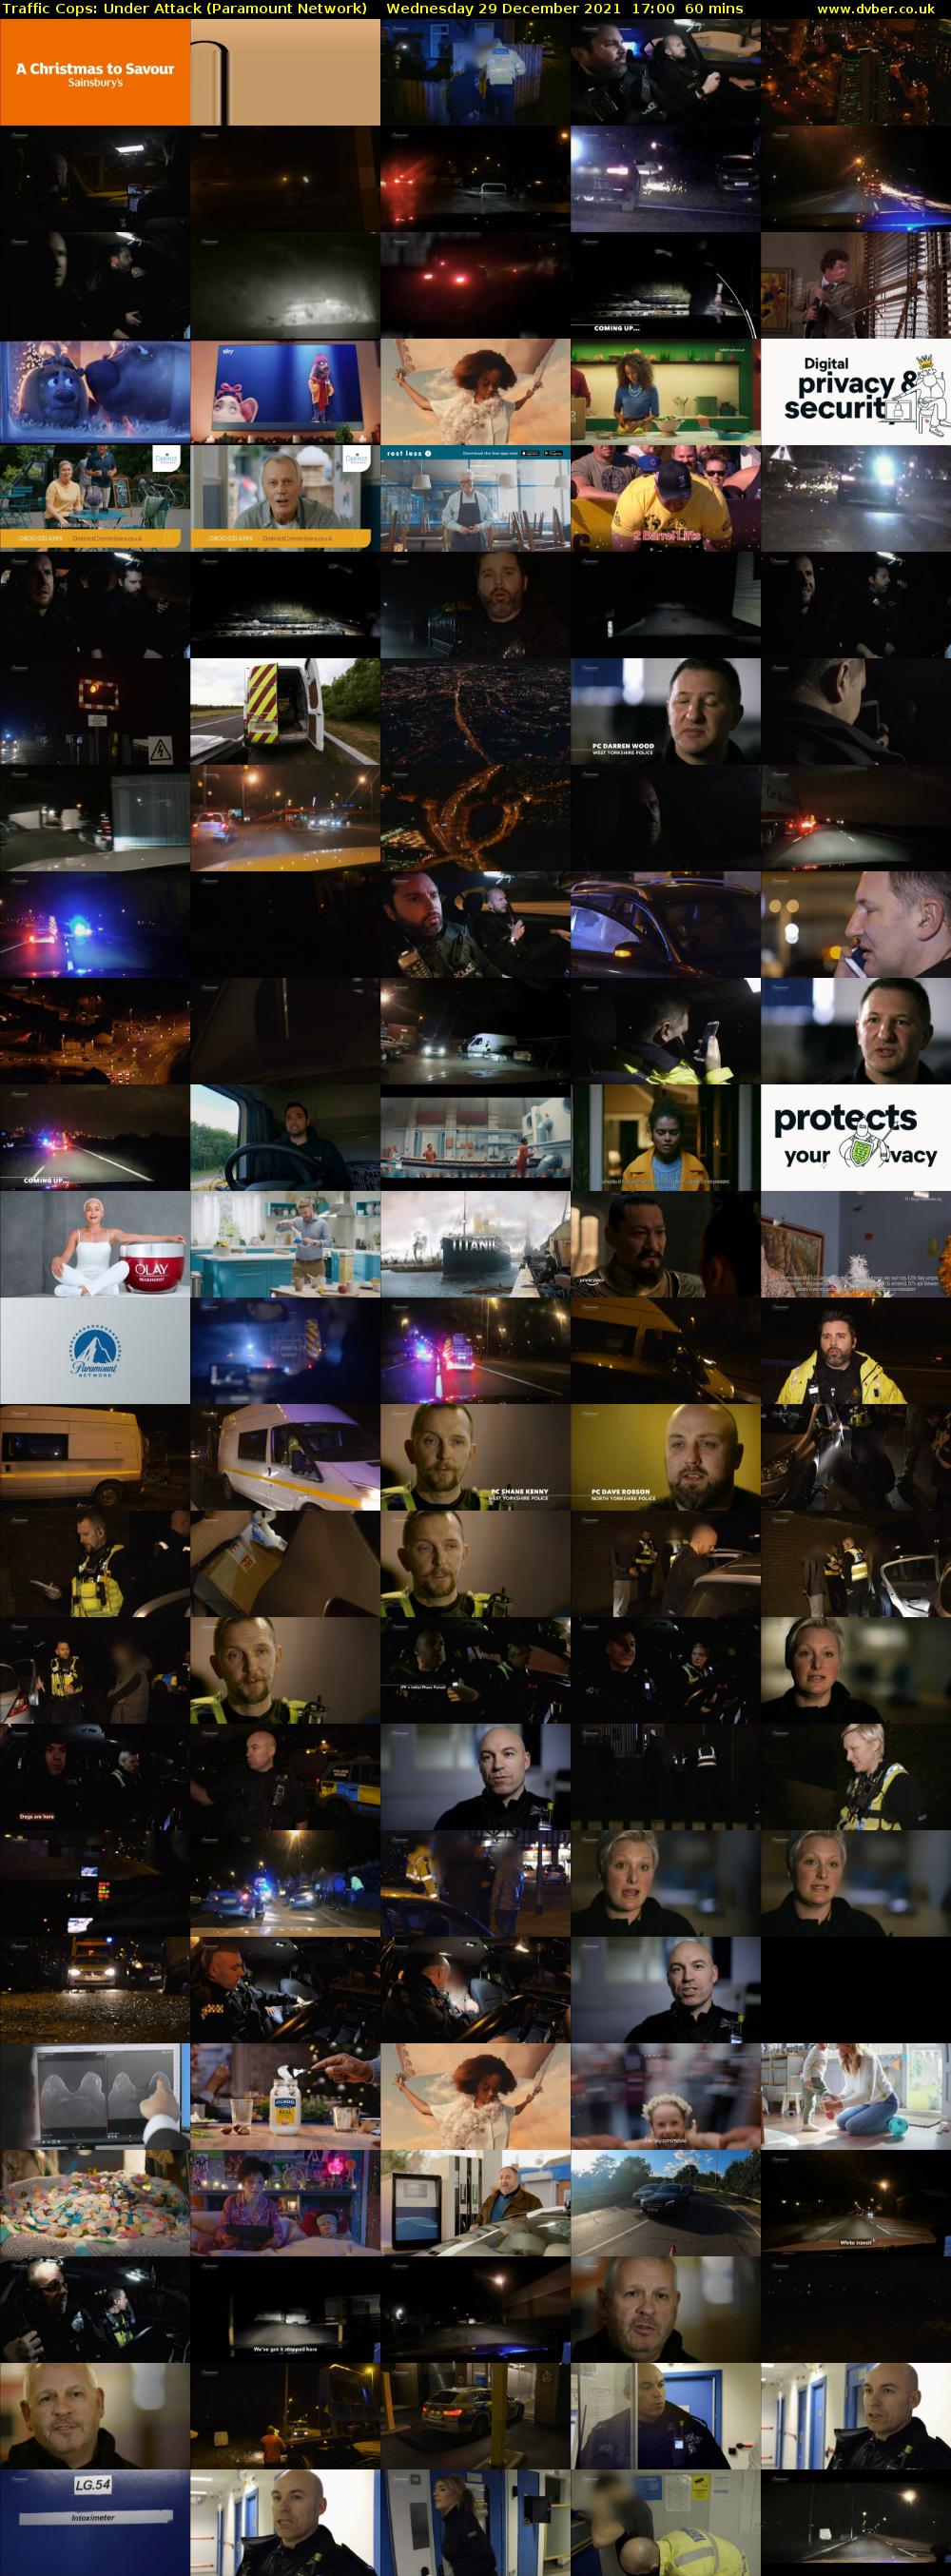 Traffic Cops: Under Attack (Paramount Network) Wednesday 29 December 2021 17:00 - 18:00